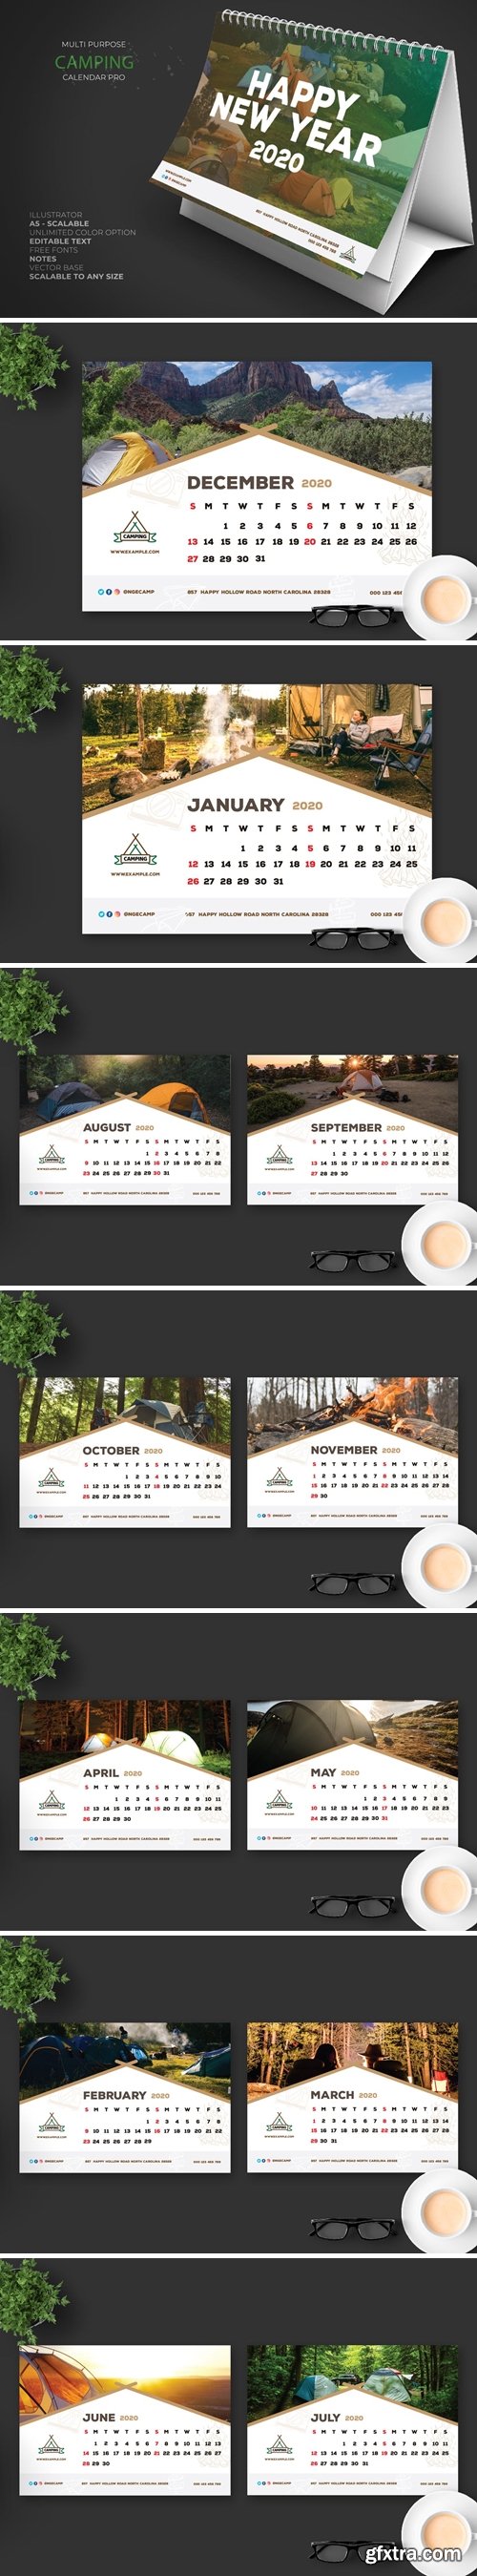 2020 Camping Calendar Pro